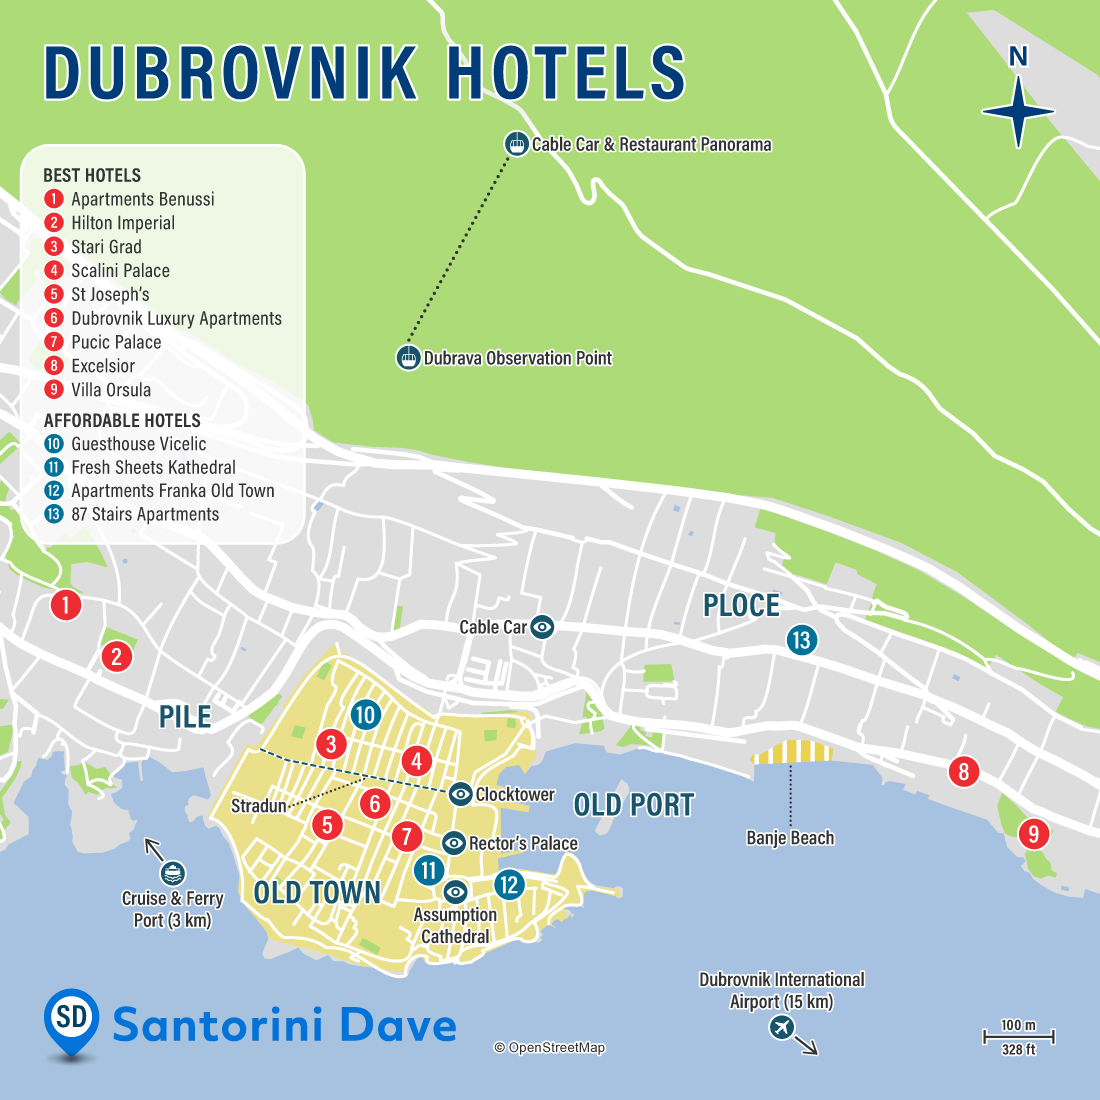 Map of Dubrovnik Hotels and Neighborhoods